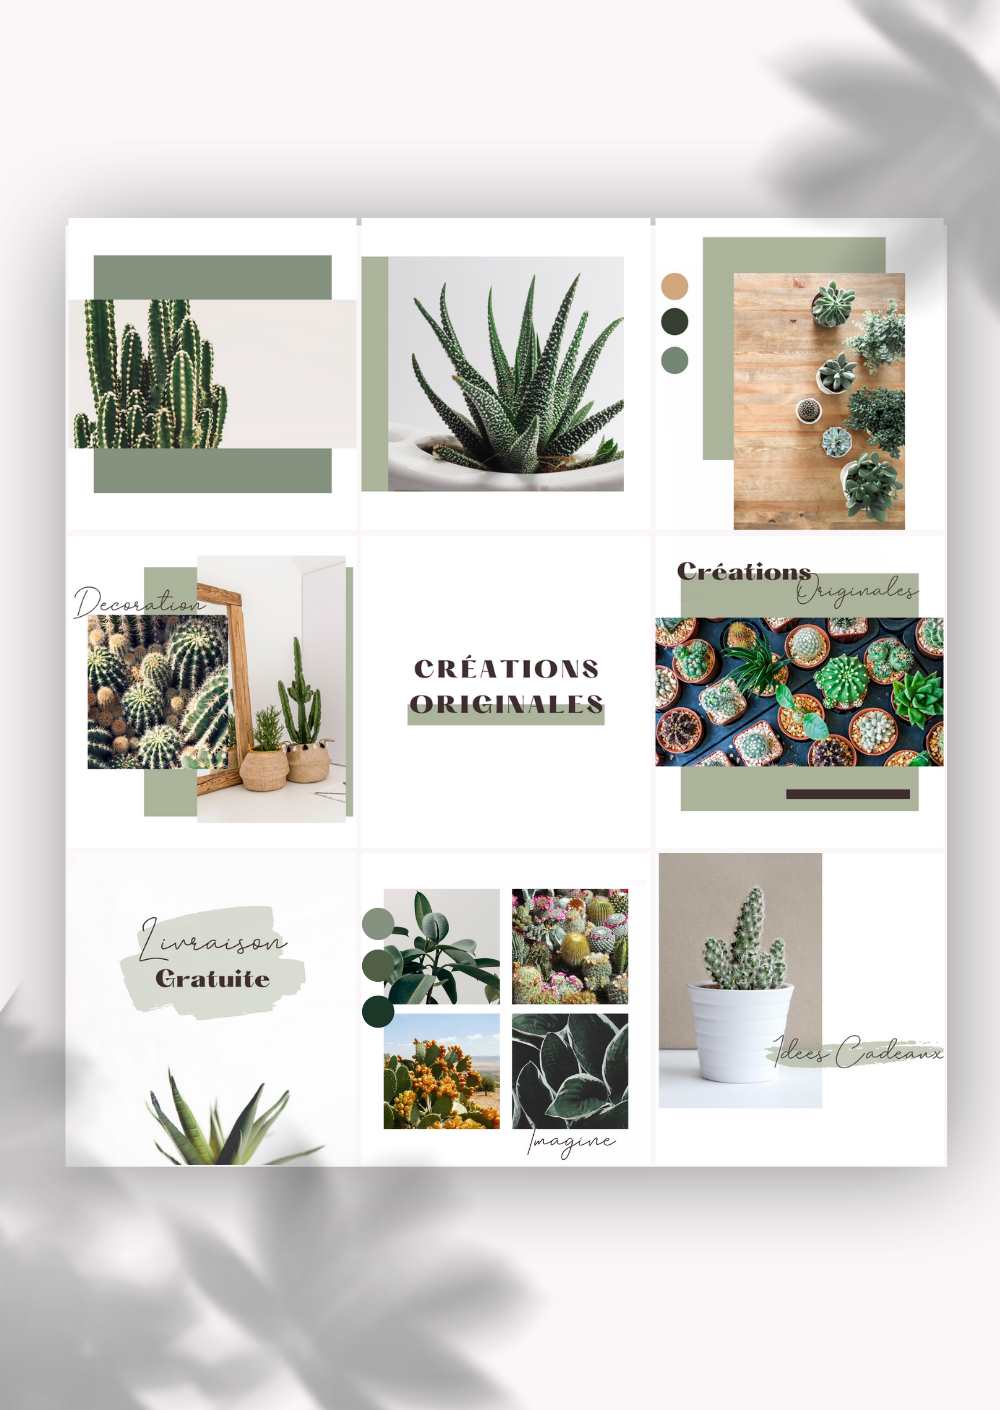 9 Templates de Posts - Cactus - Creative Kits